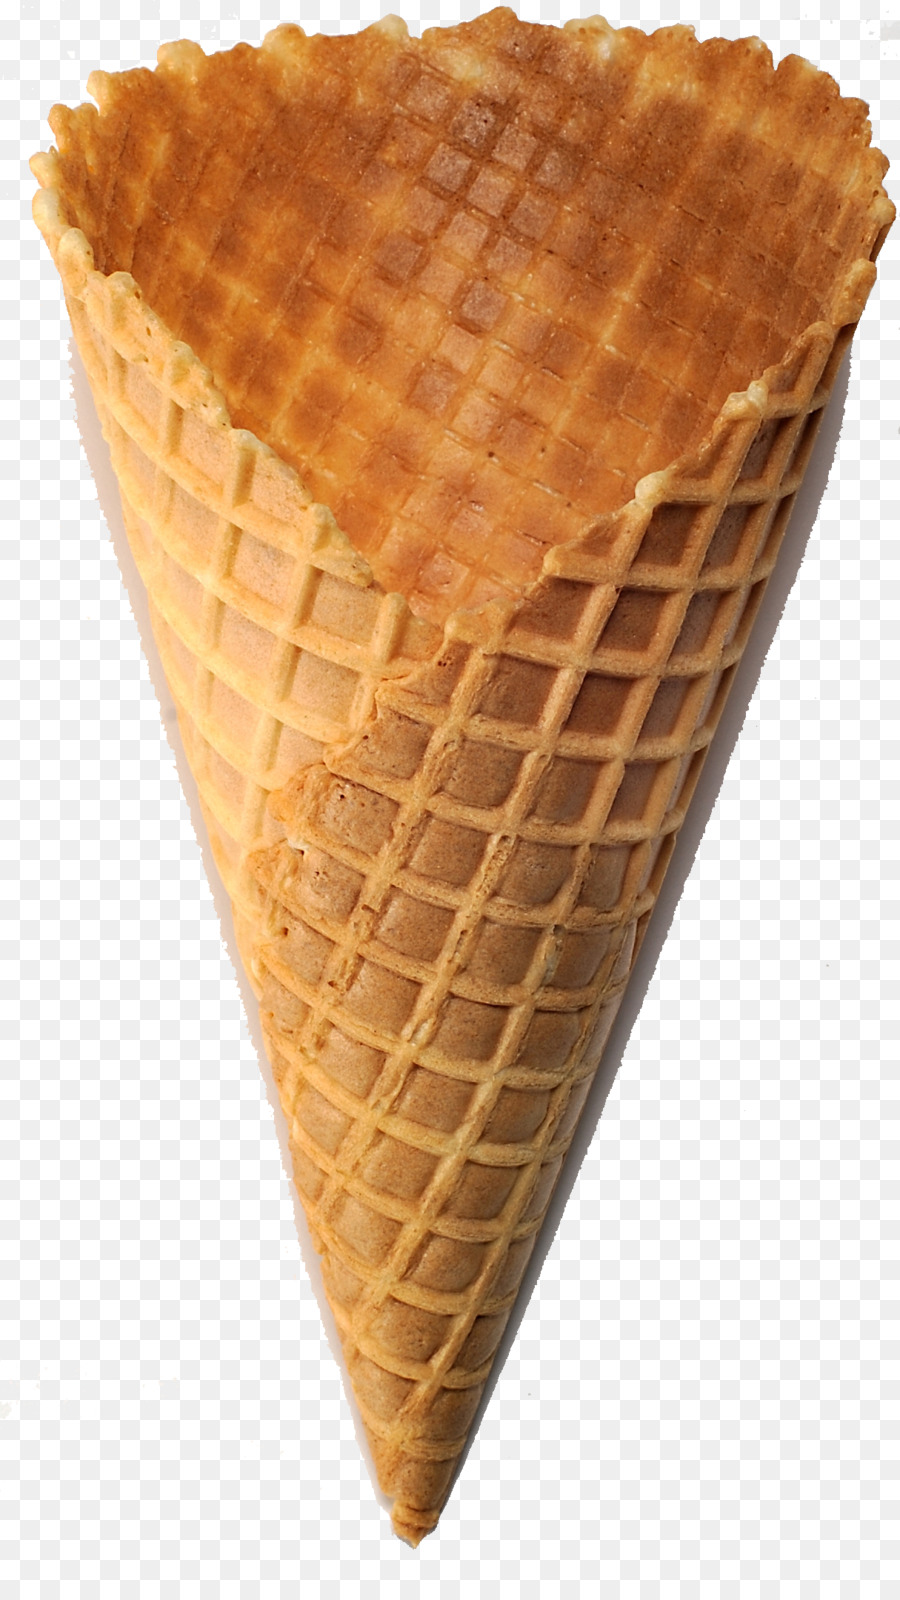 Ice Cream Cones Waffle Frozen yogurt - ice cream cone png download - 1215*2148 - Free Transparent Ice Cream Cones png Download.